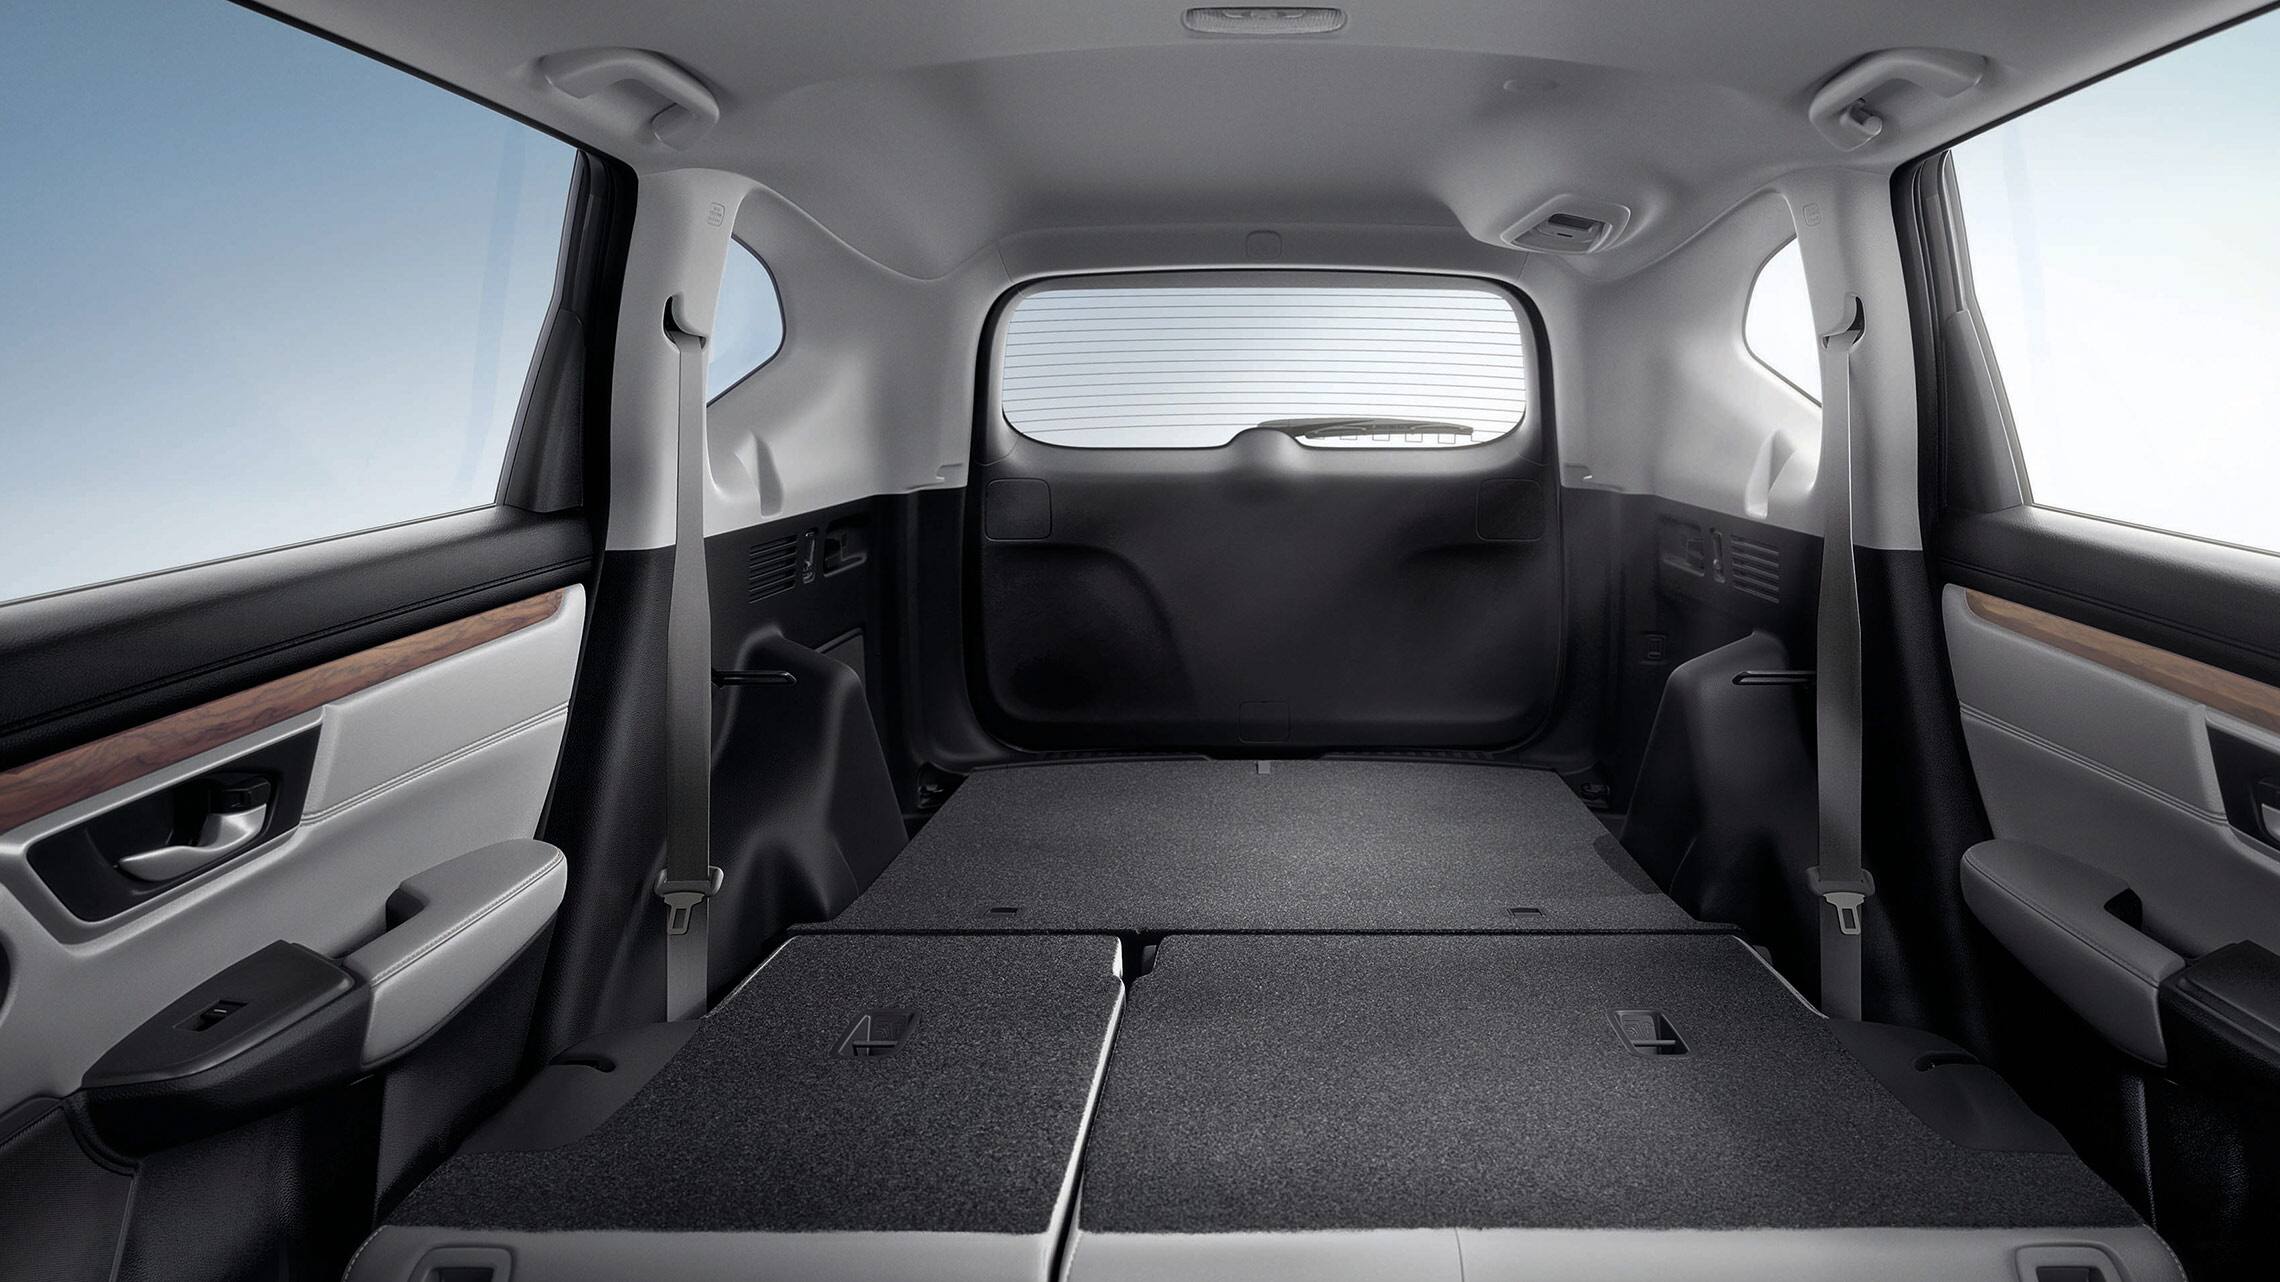 2019 Honda CR-V interior cargo view of easy fold-down 60/40 split rear seatback.